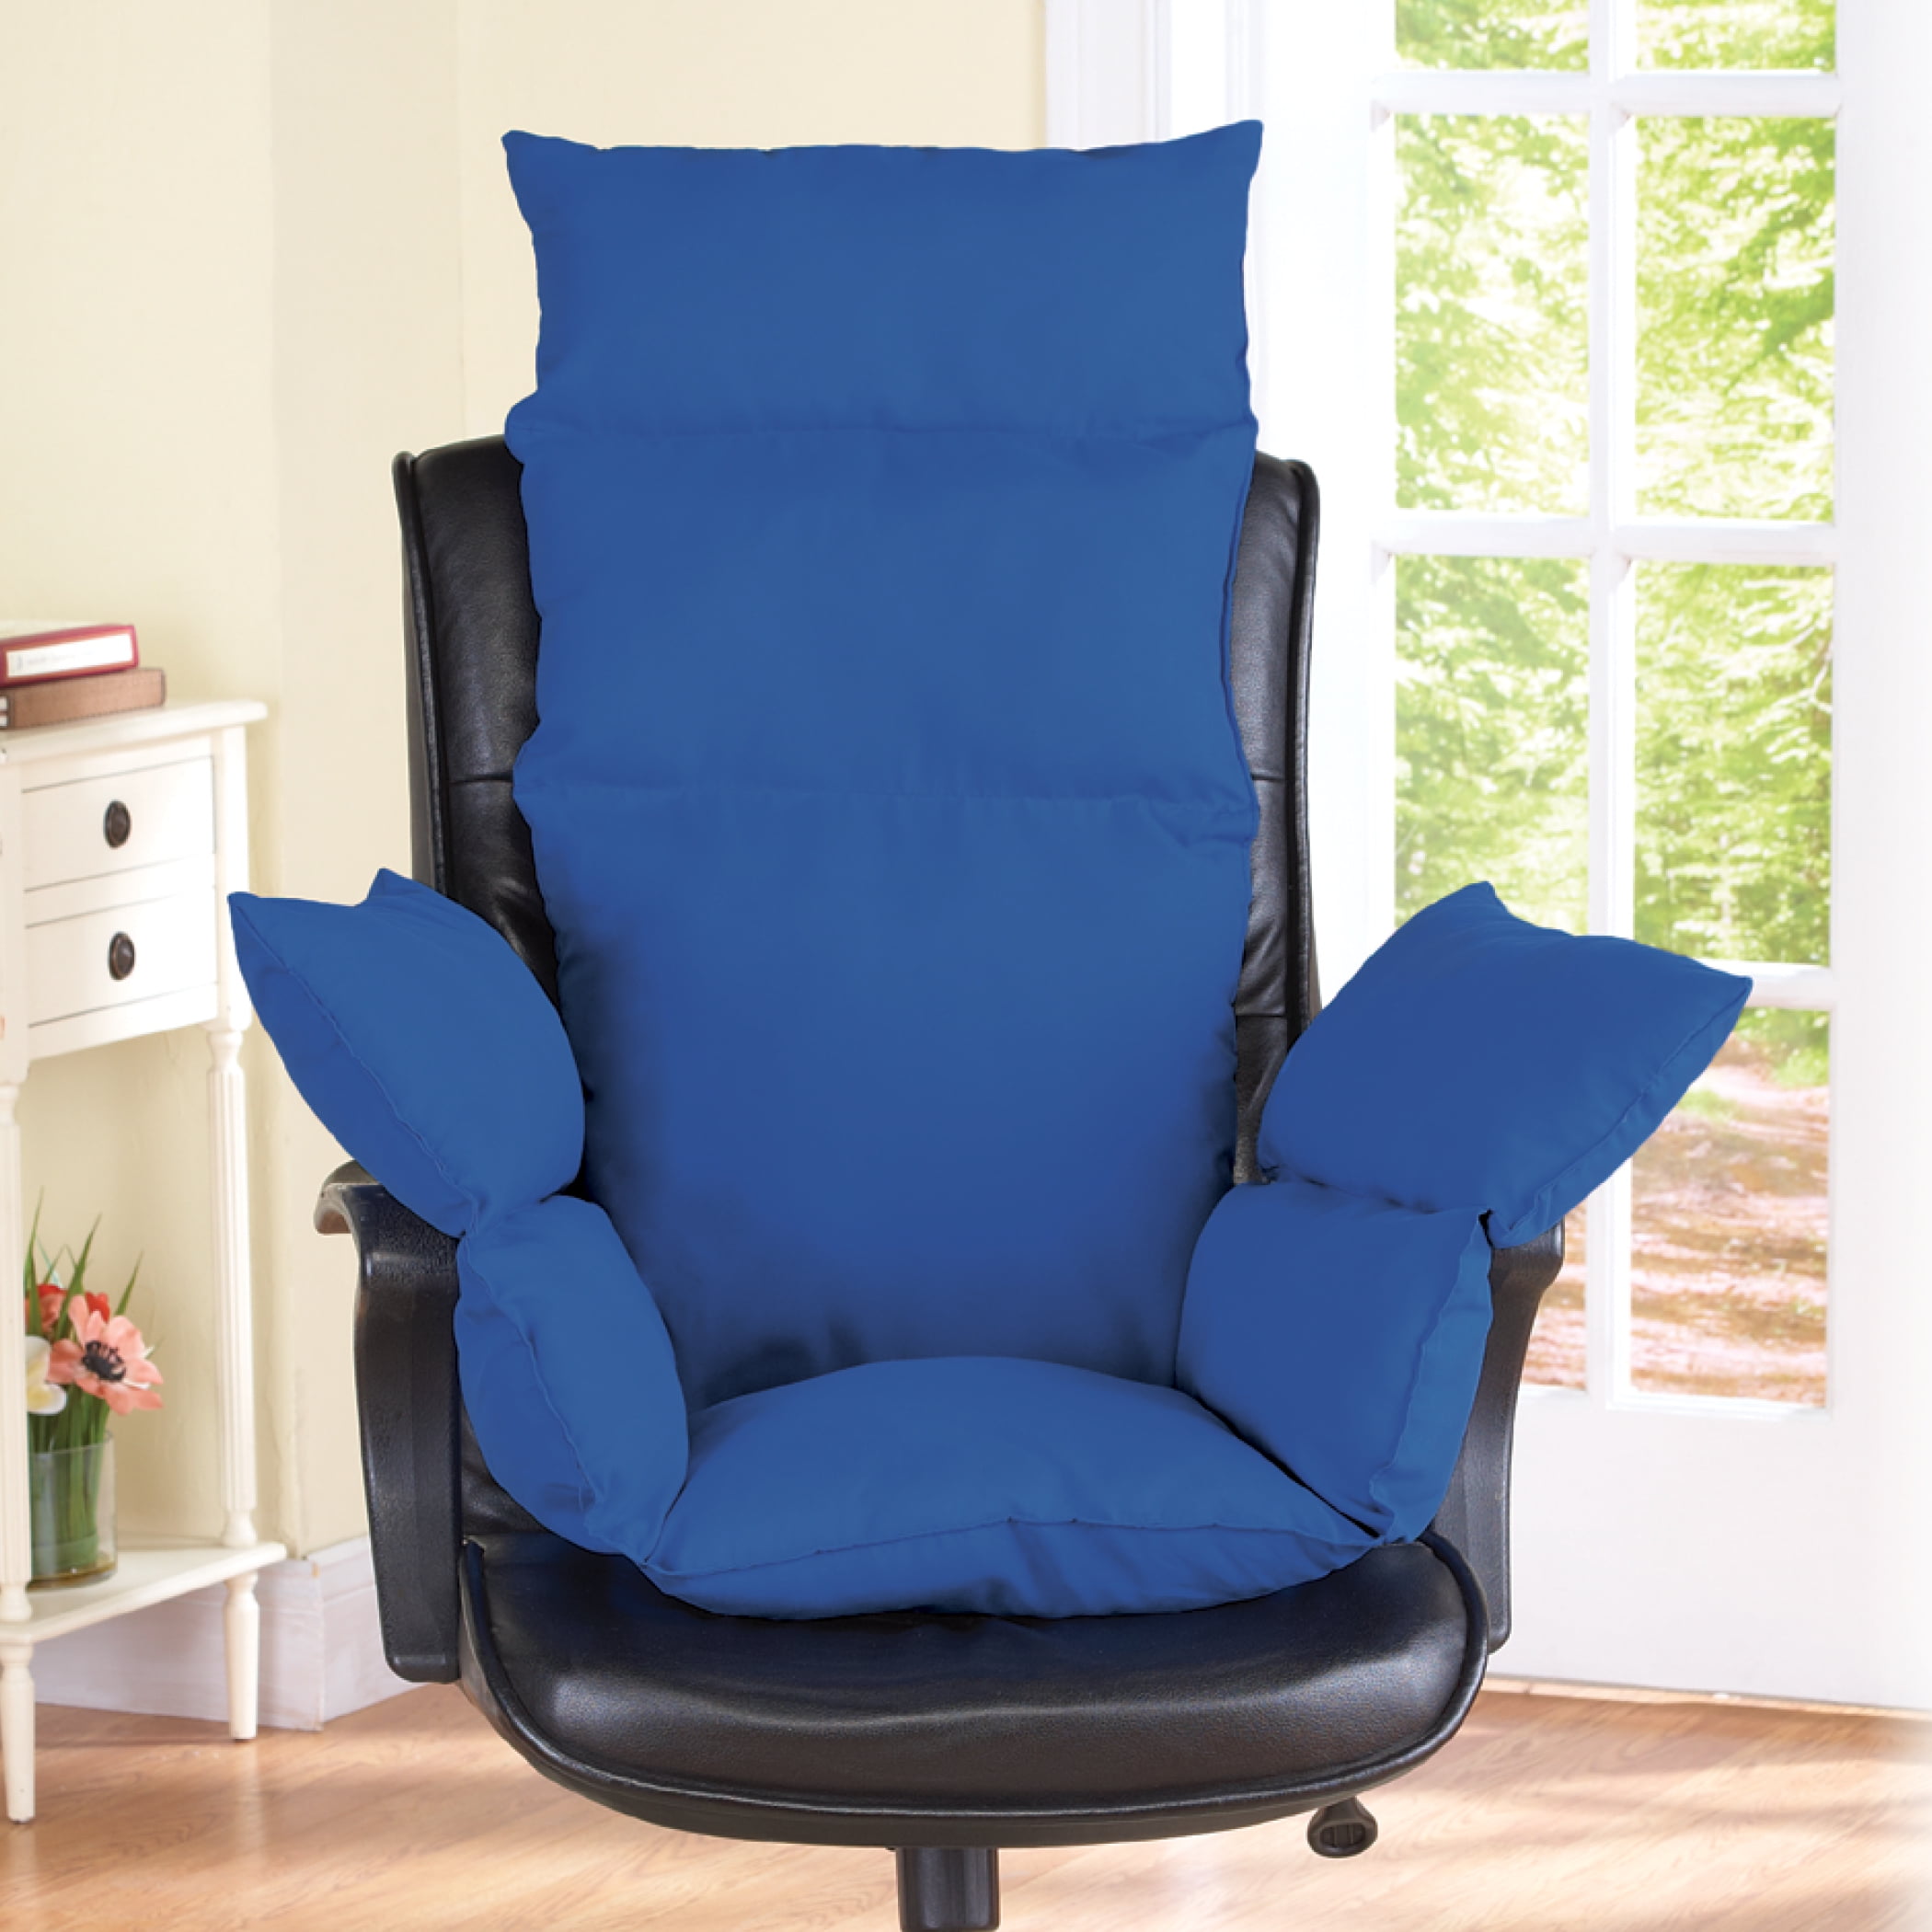 Extra Support Cozy Chair Cushion - Walmart.com